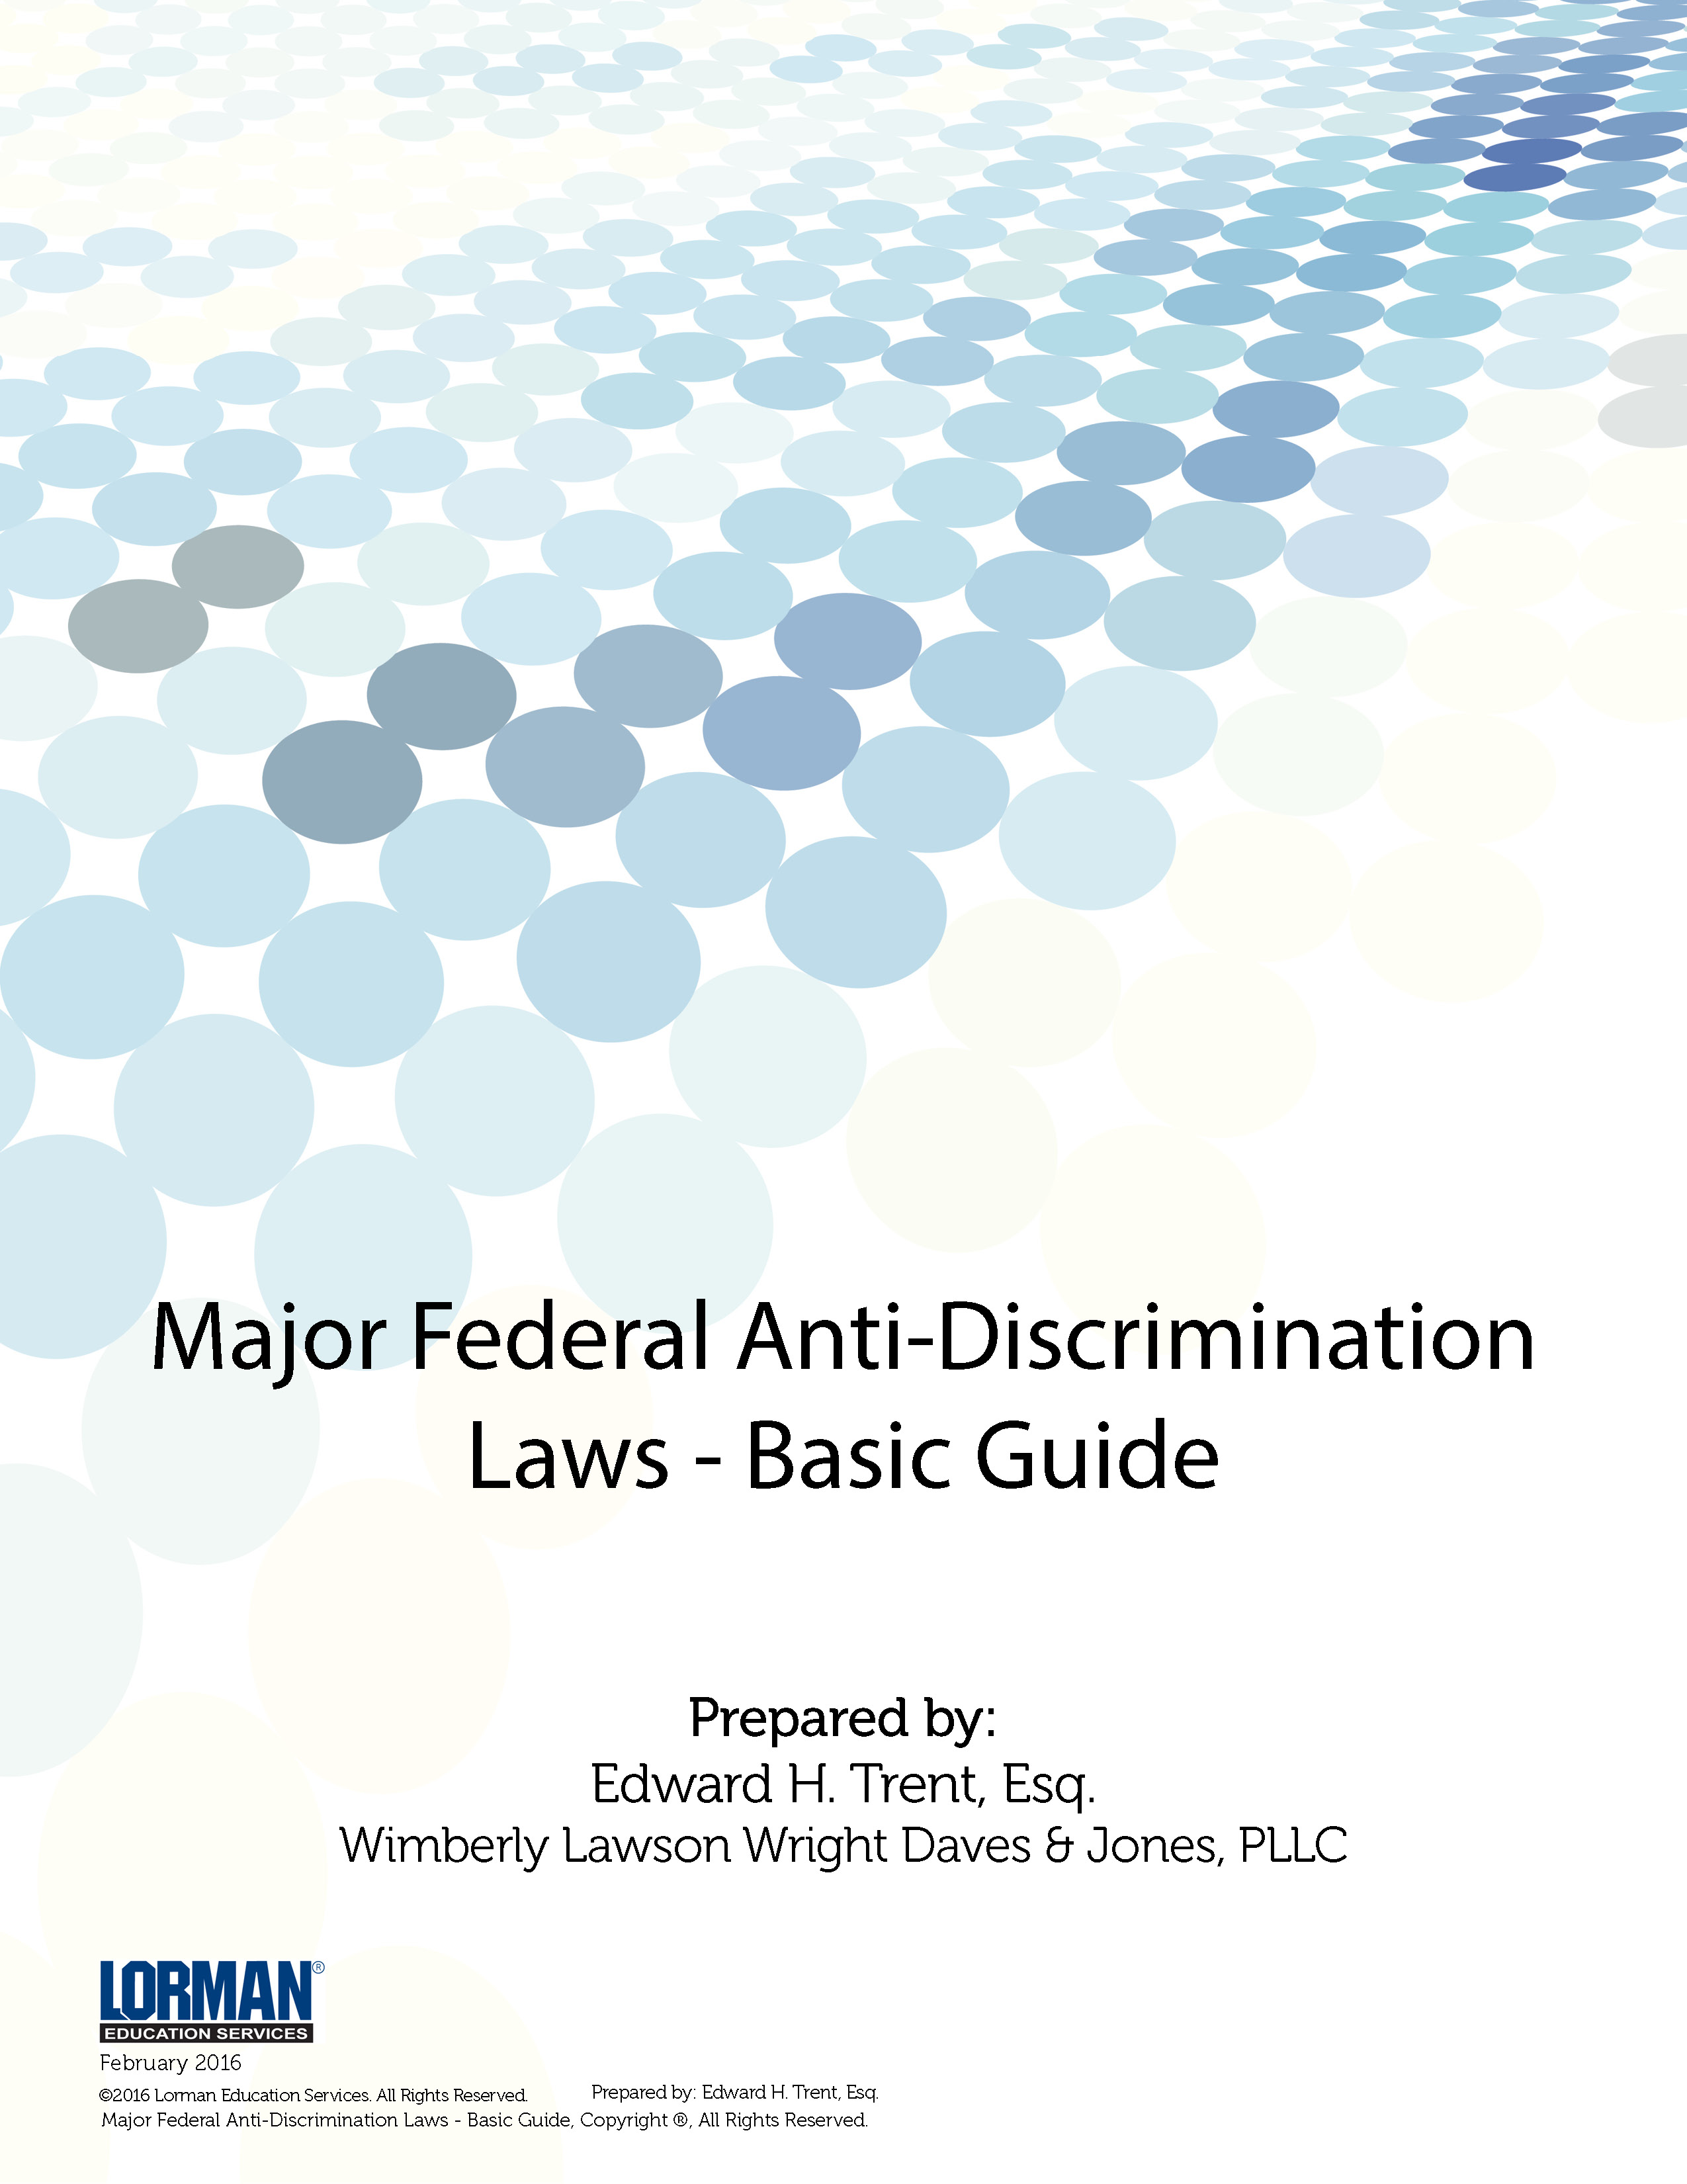 Major Federal Anti-Discrimination Laws - Basic Guide